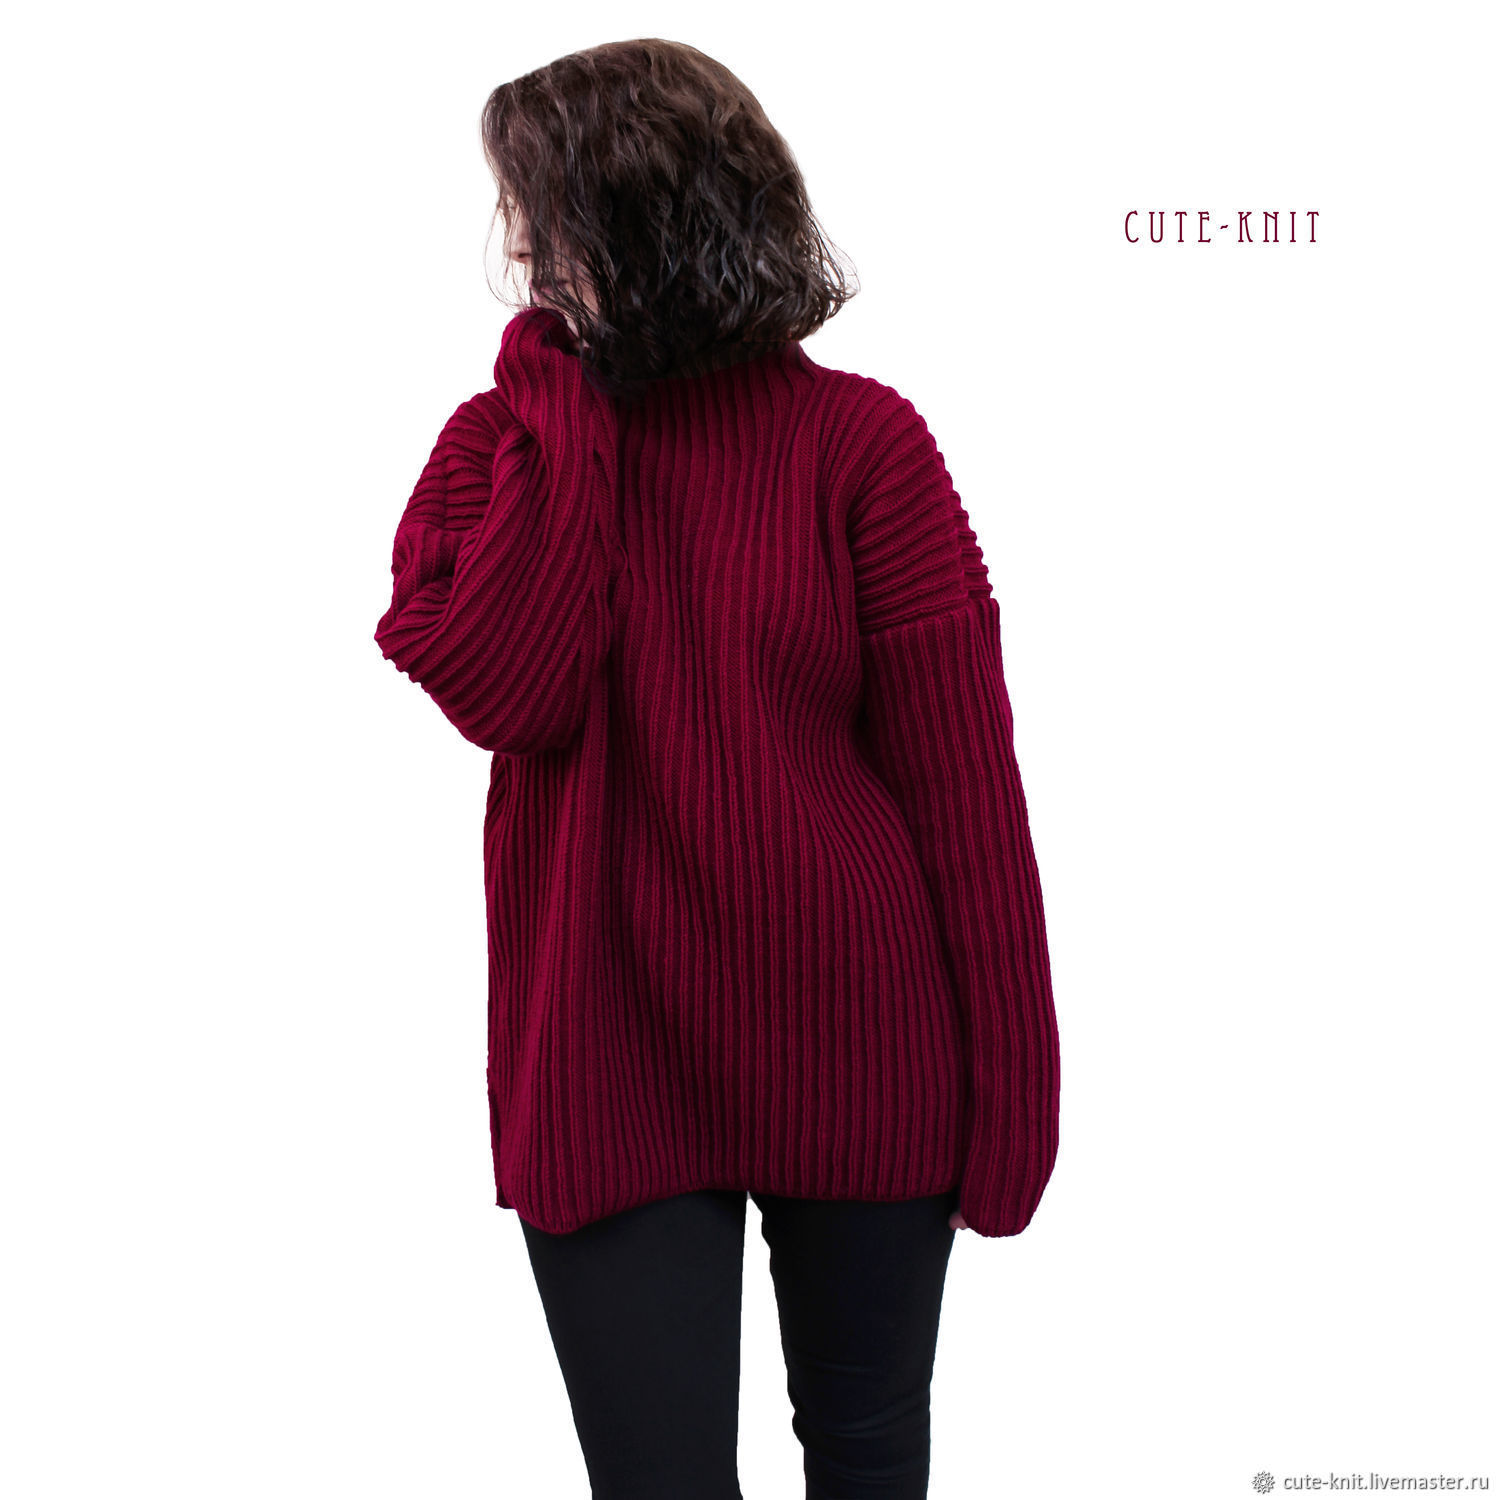 Women knitted sweater red, Sweaters, Yerevan,  Фото №1